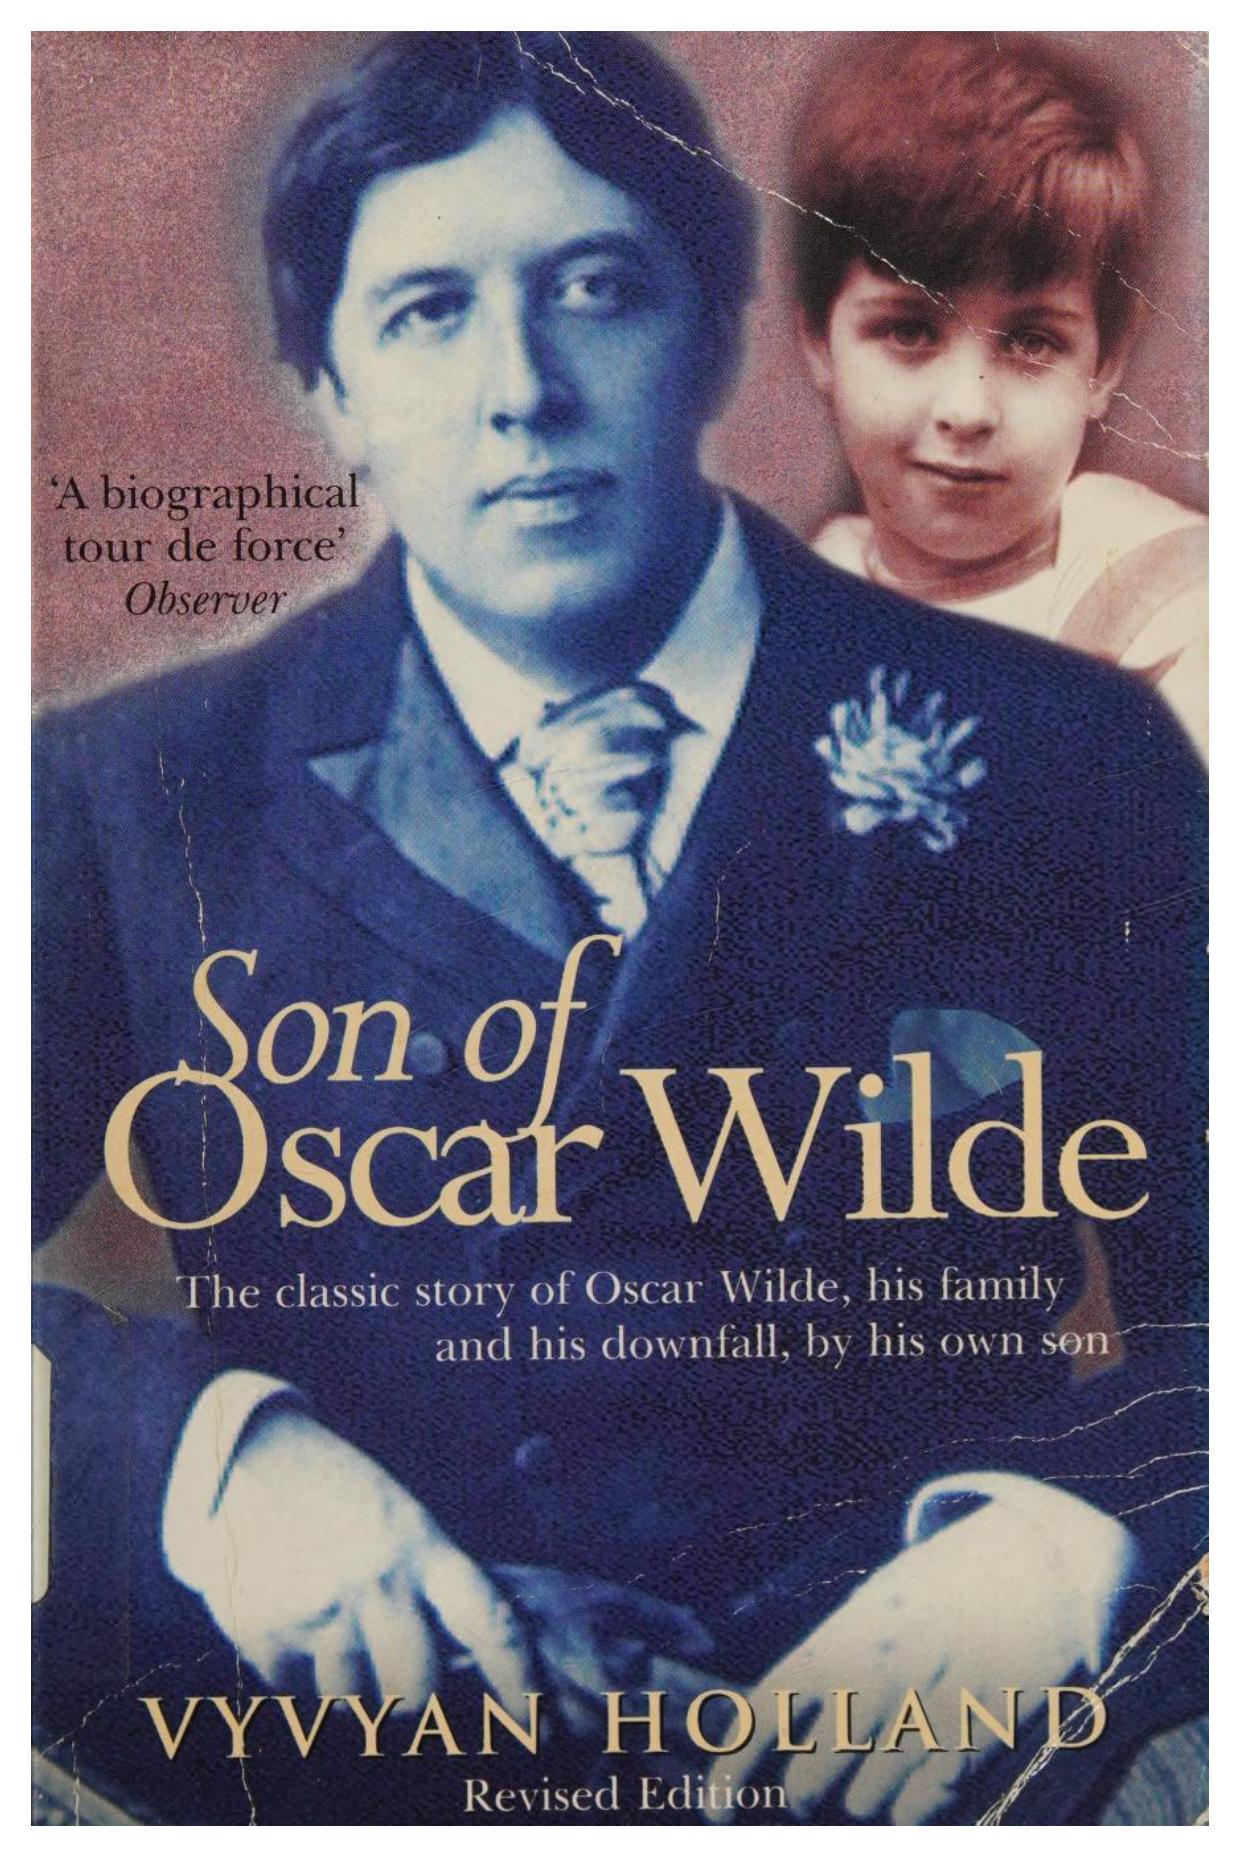 Son of Oscar Wilde by Vyvyan Holland